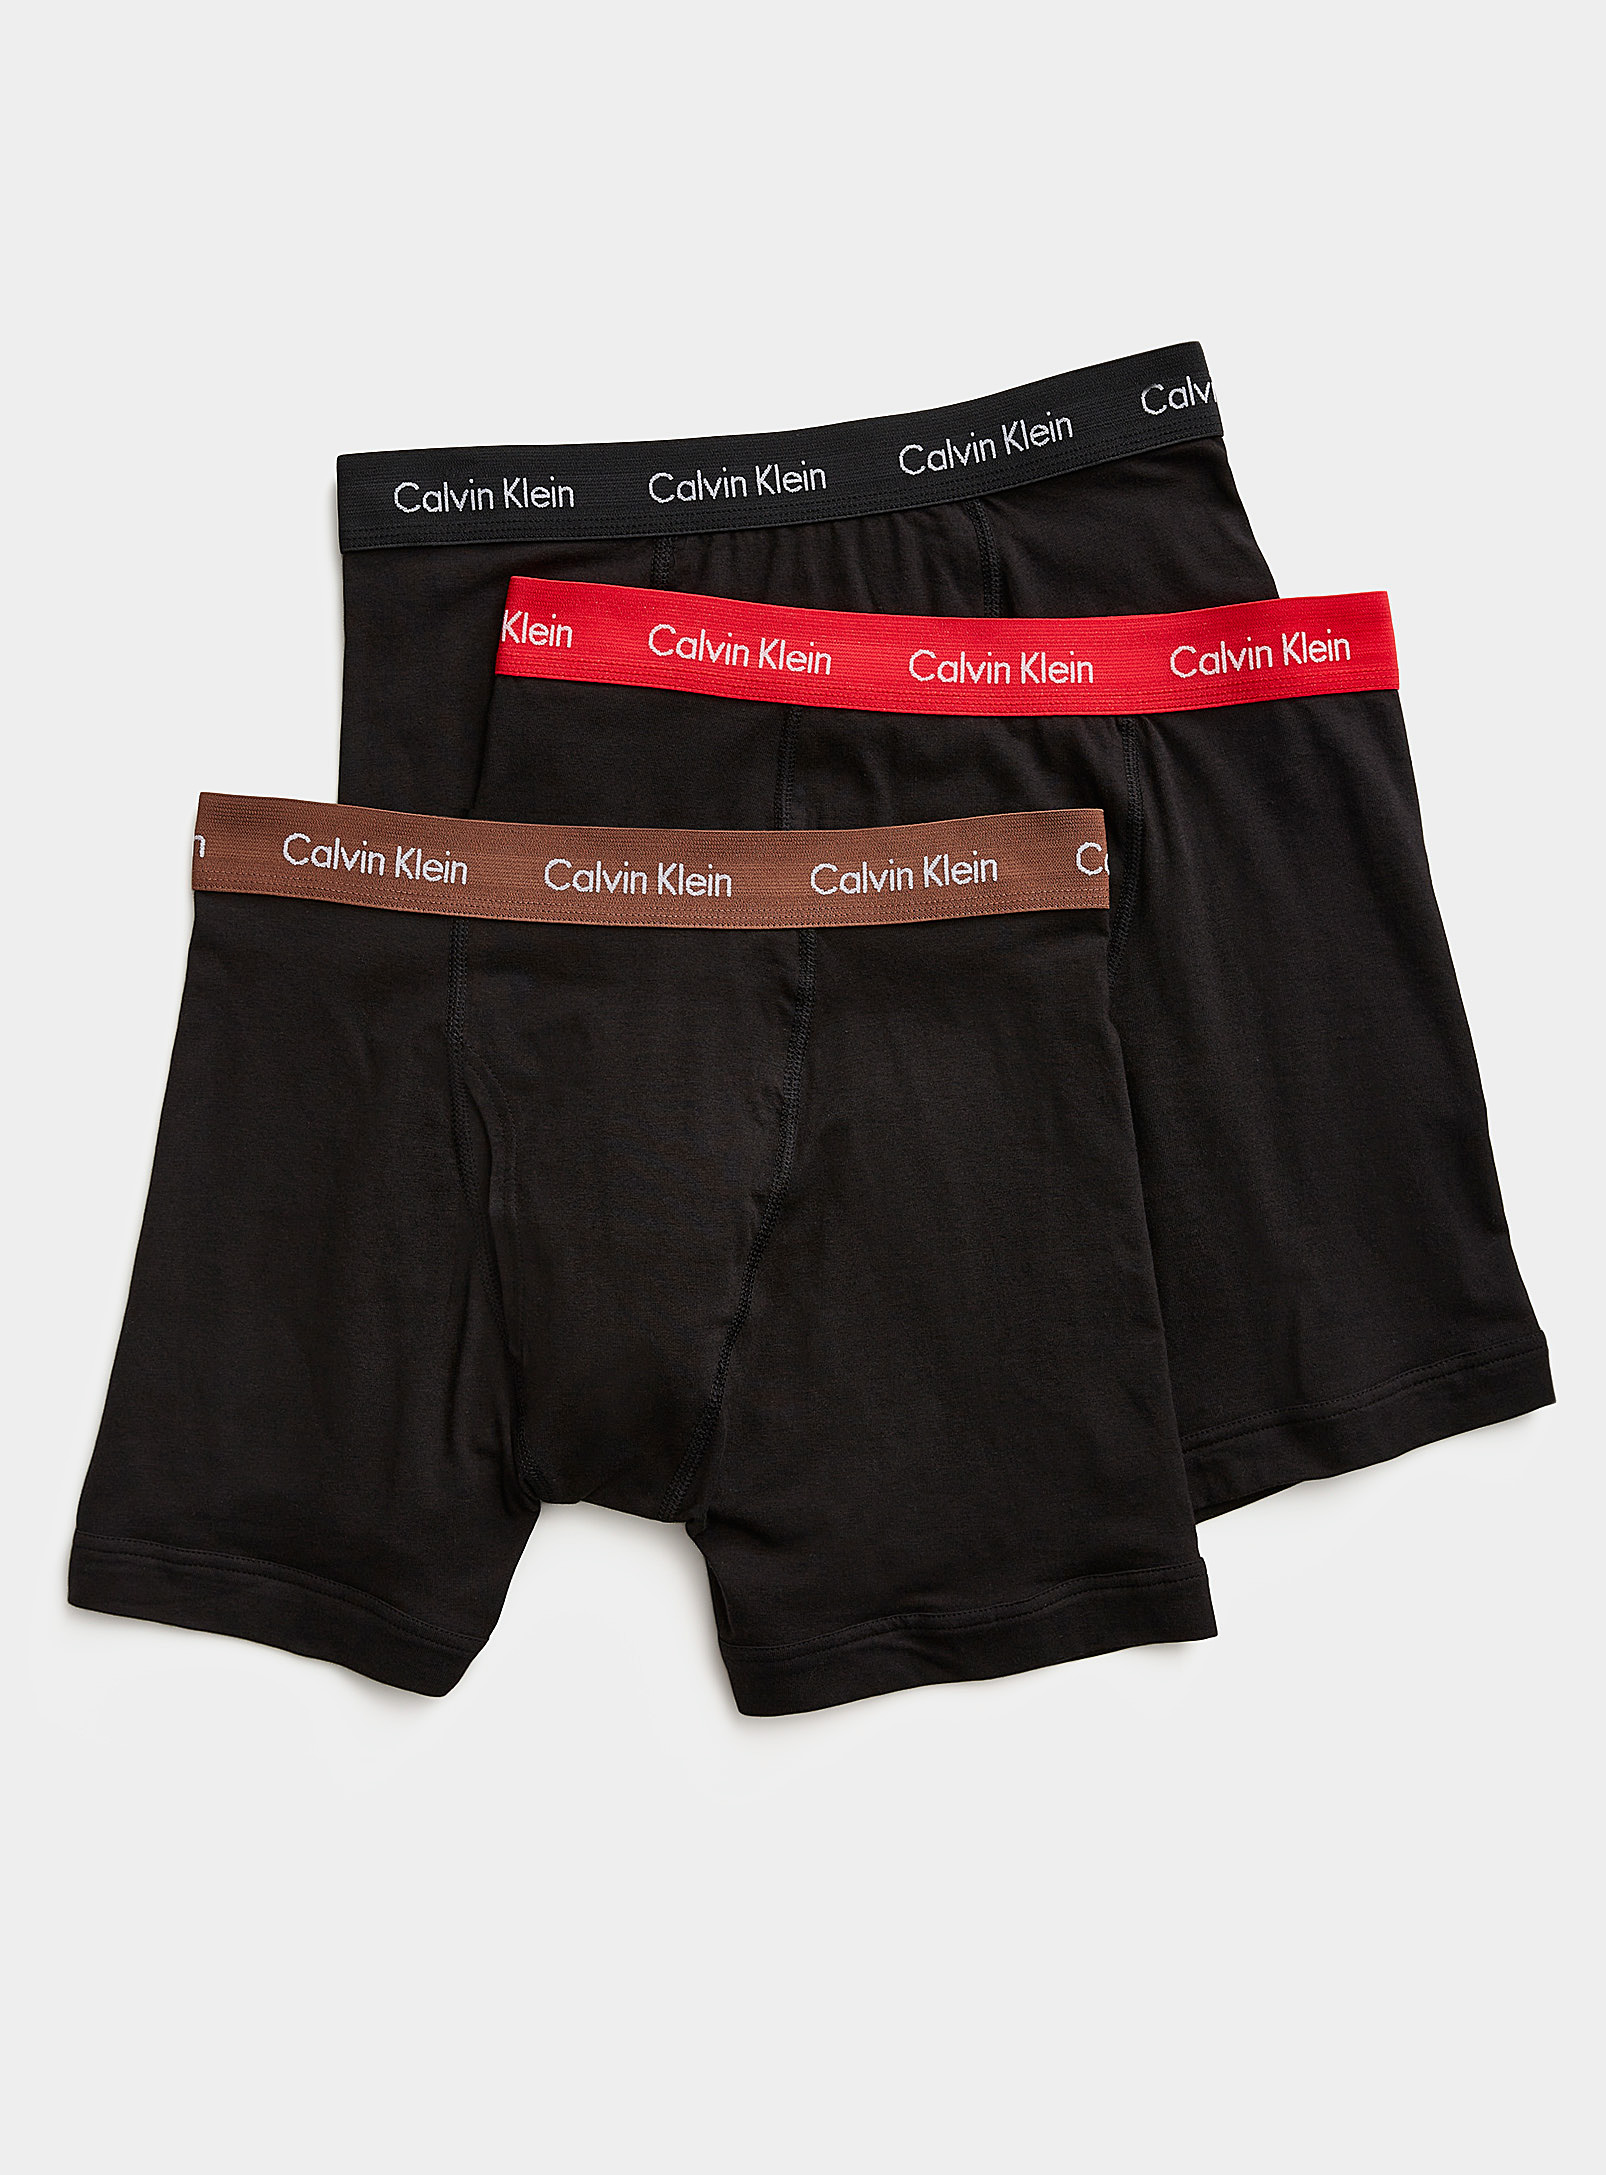 Calvin Klein Cotton Stretch Boxer Briefs 3-pack In Patterned Black